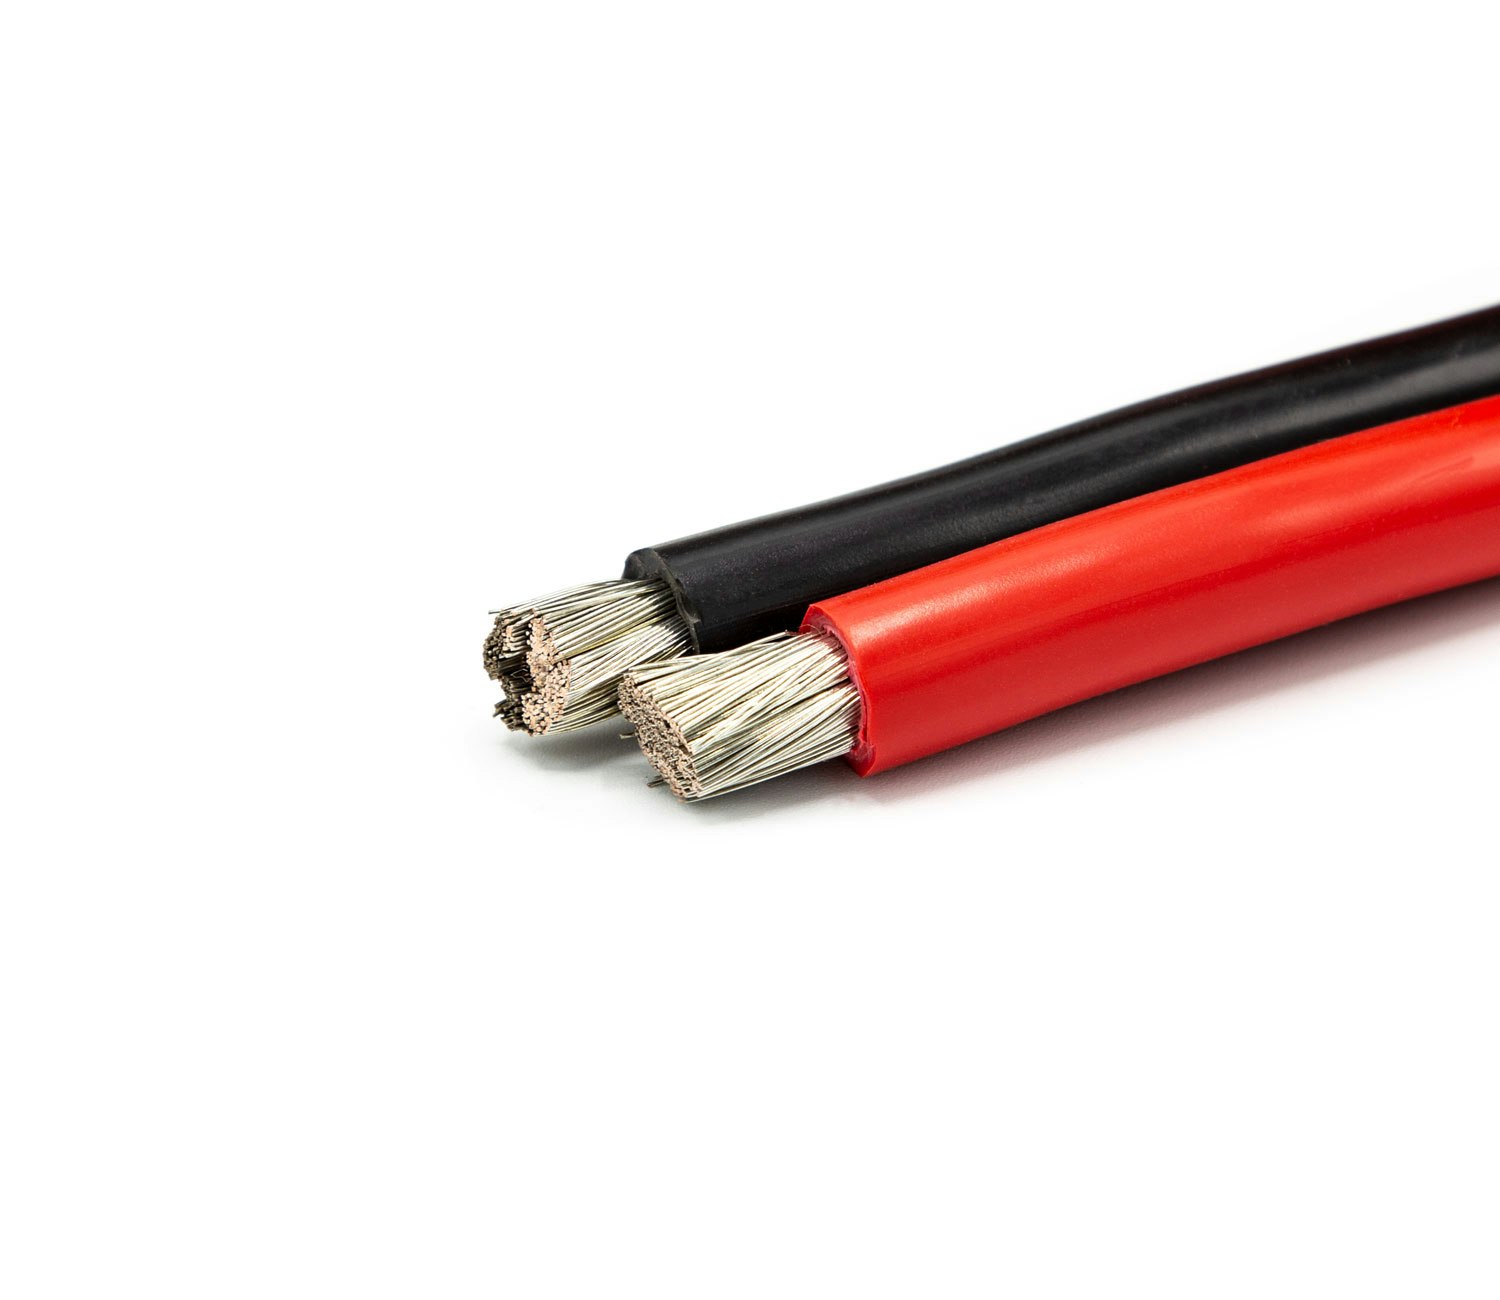  OCEANFLEX - Tinned battery cable 25mm2, 10m, Black